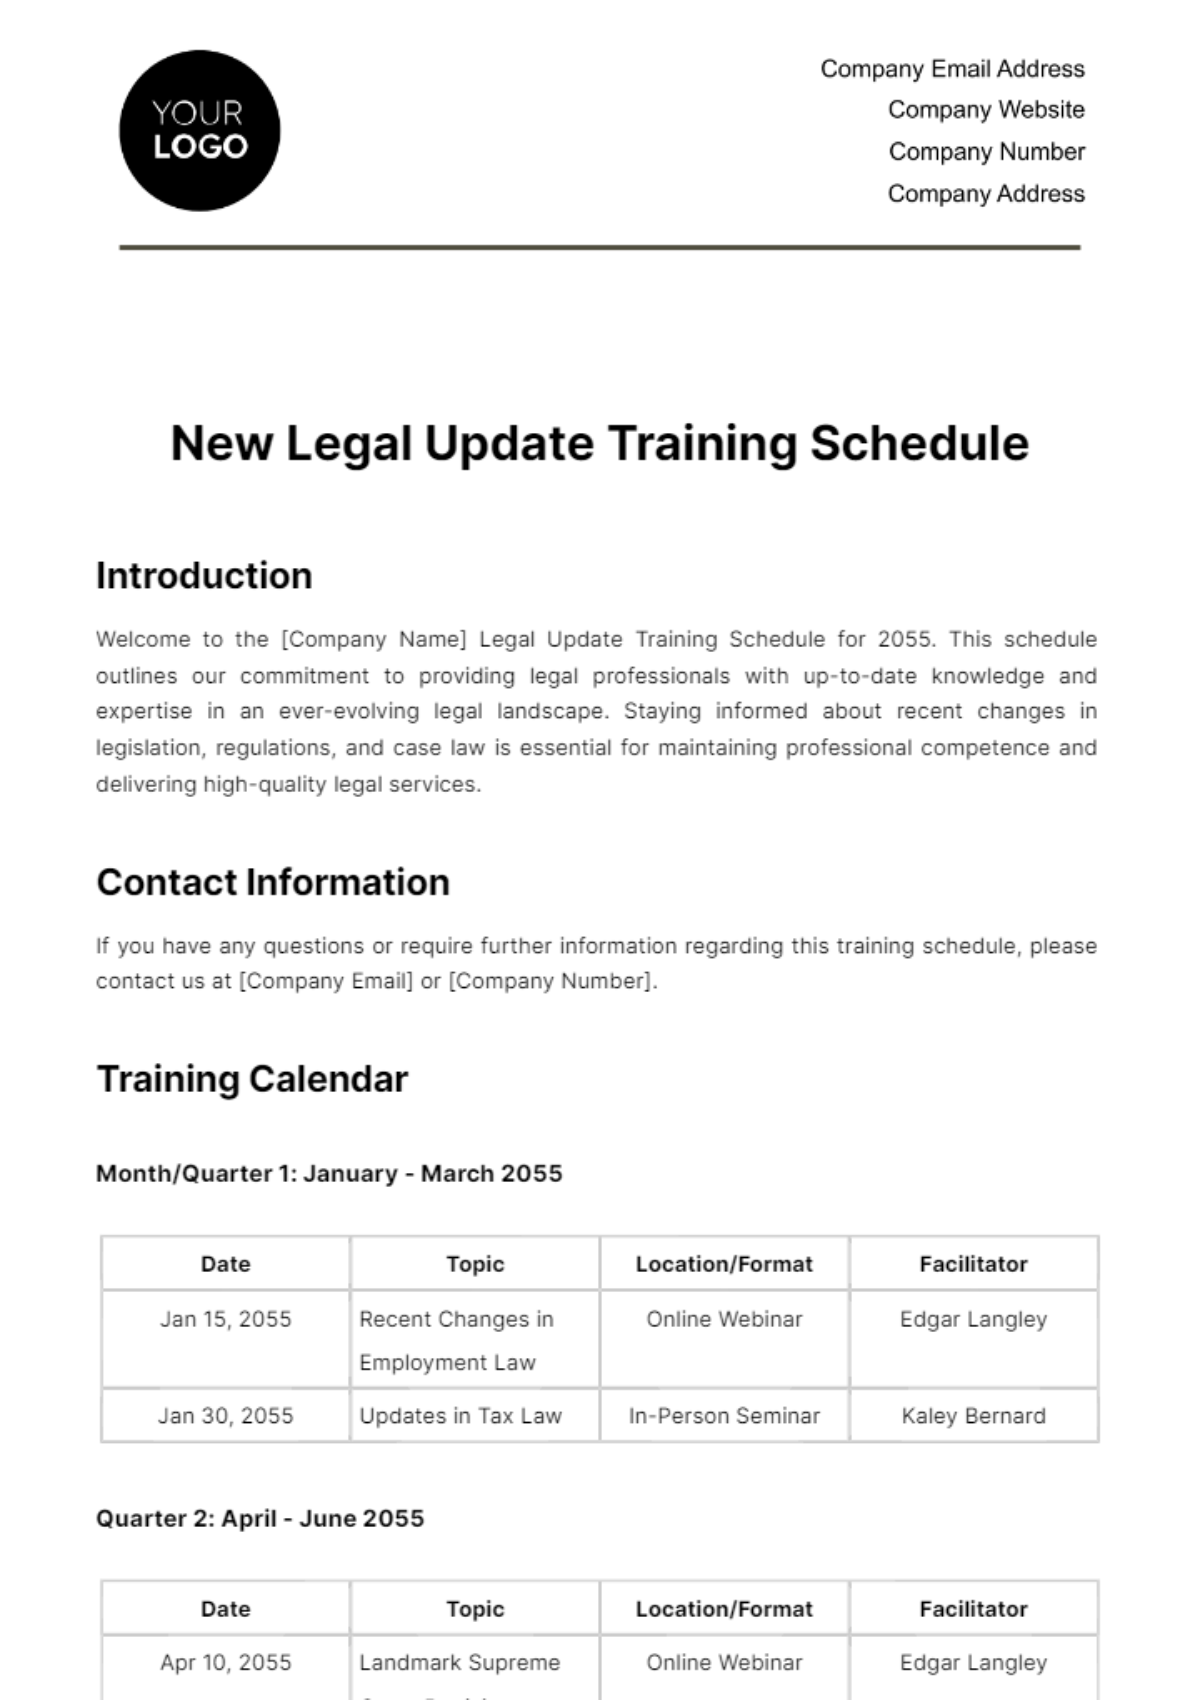 New Legal Update Training Schedule HR Template